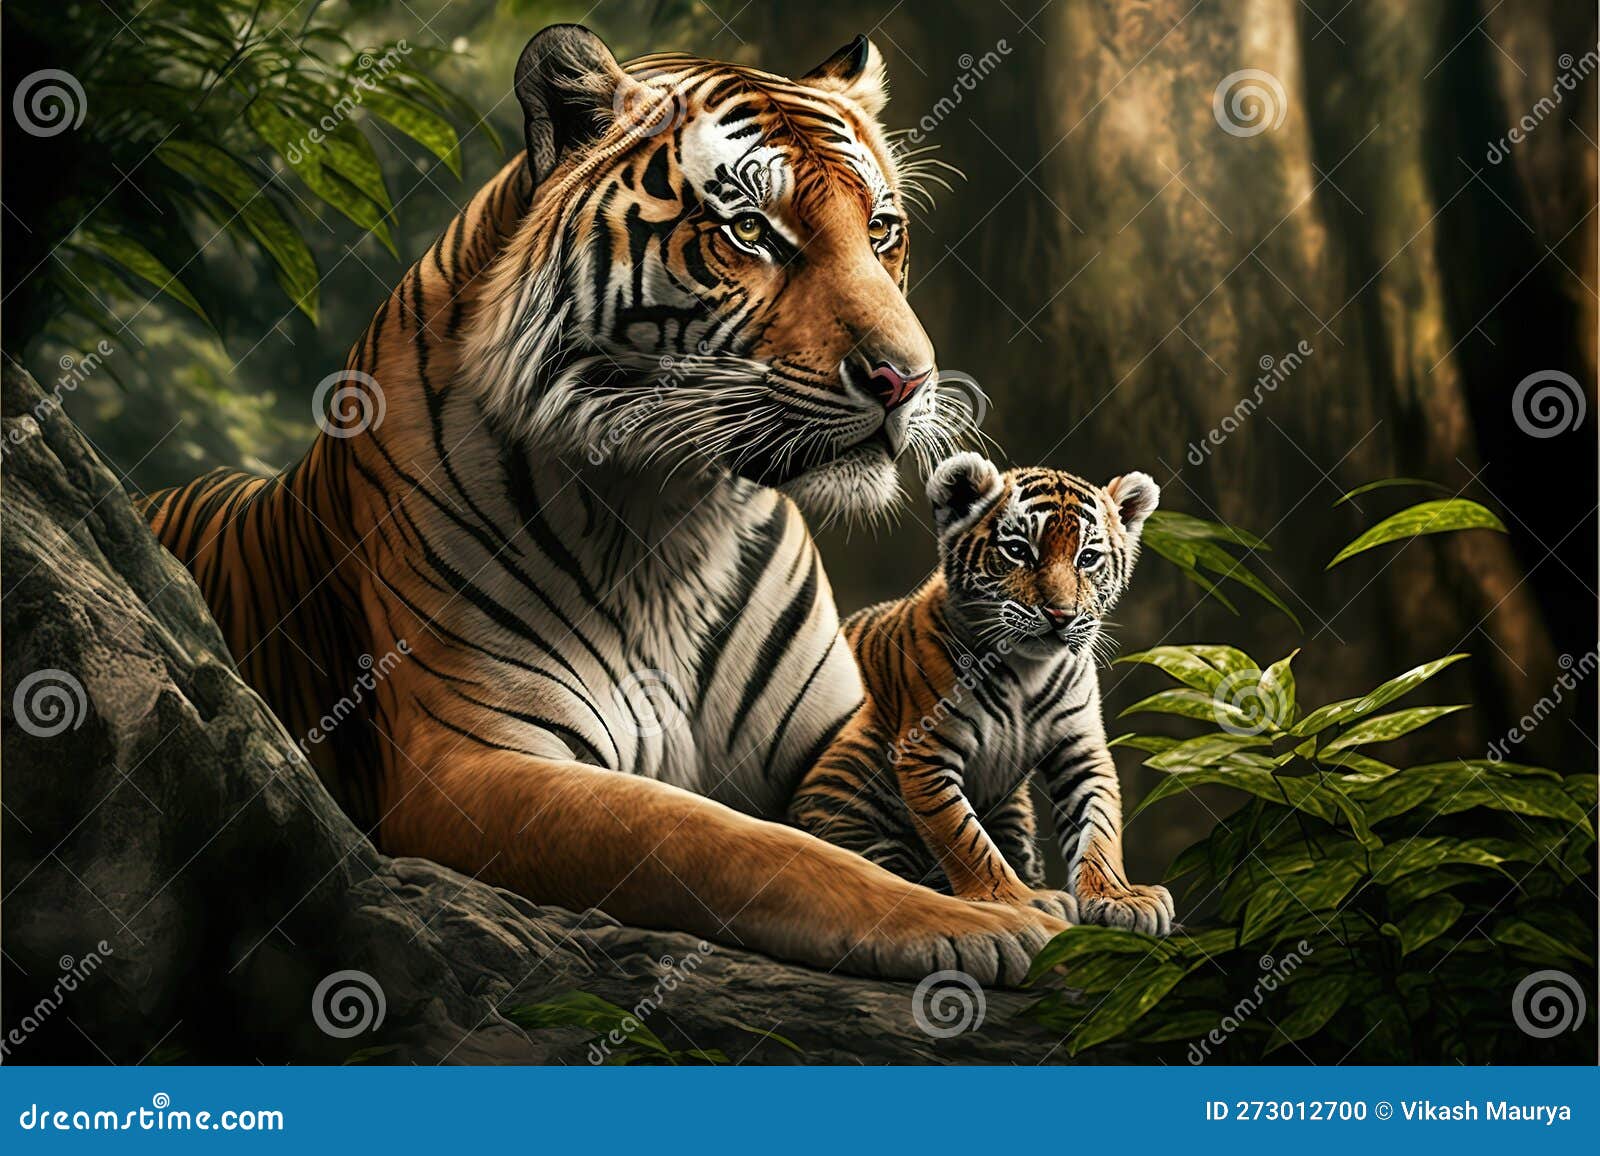 The Royal Bengal Tiger by Velvet-in-August on DeviantArt